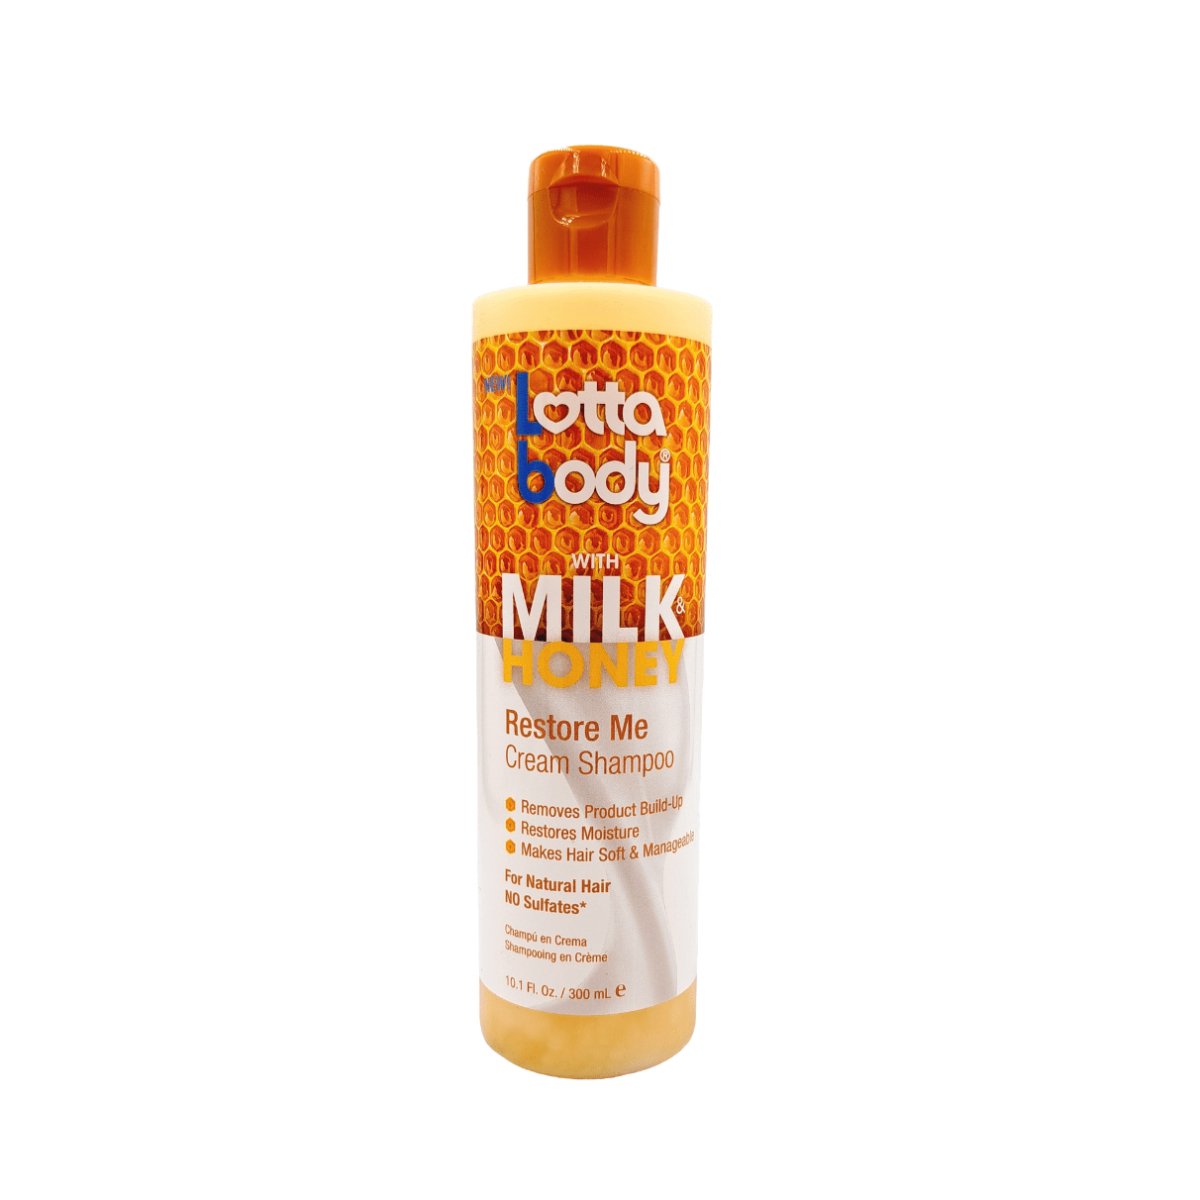 Lotta Body Restore Me Cream Shampoo 300ml - CosFair GmbH